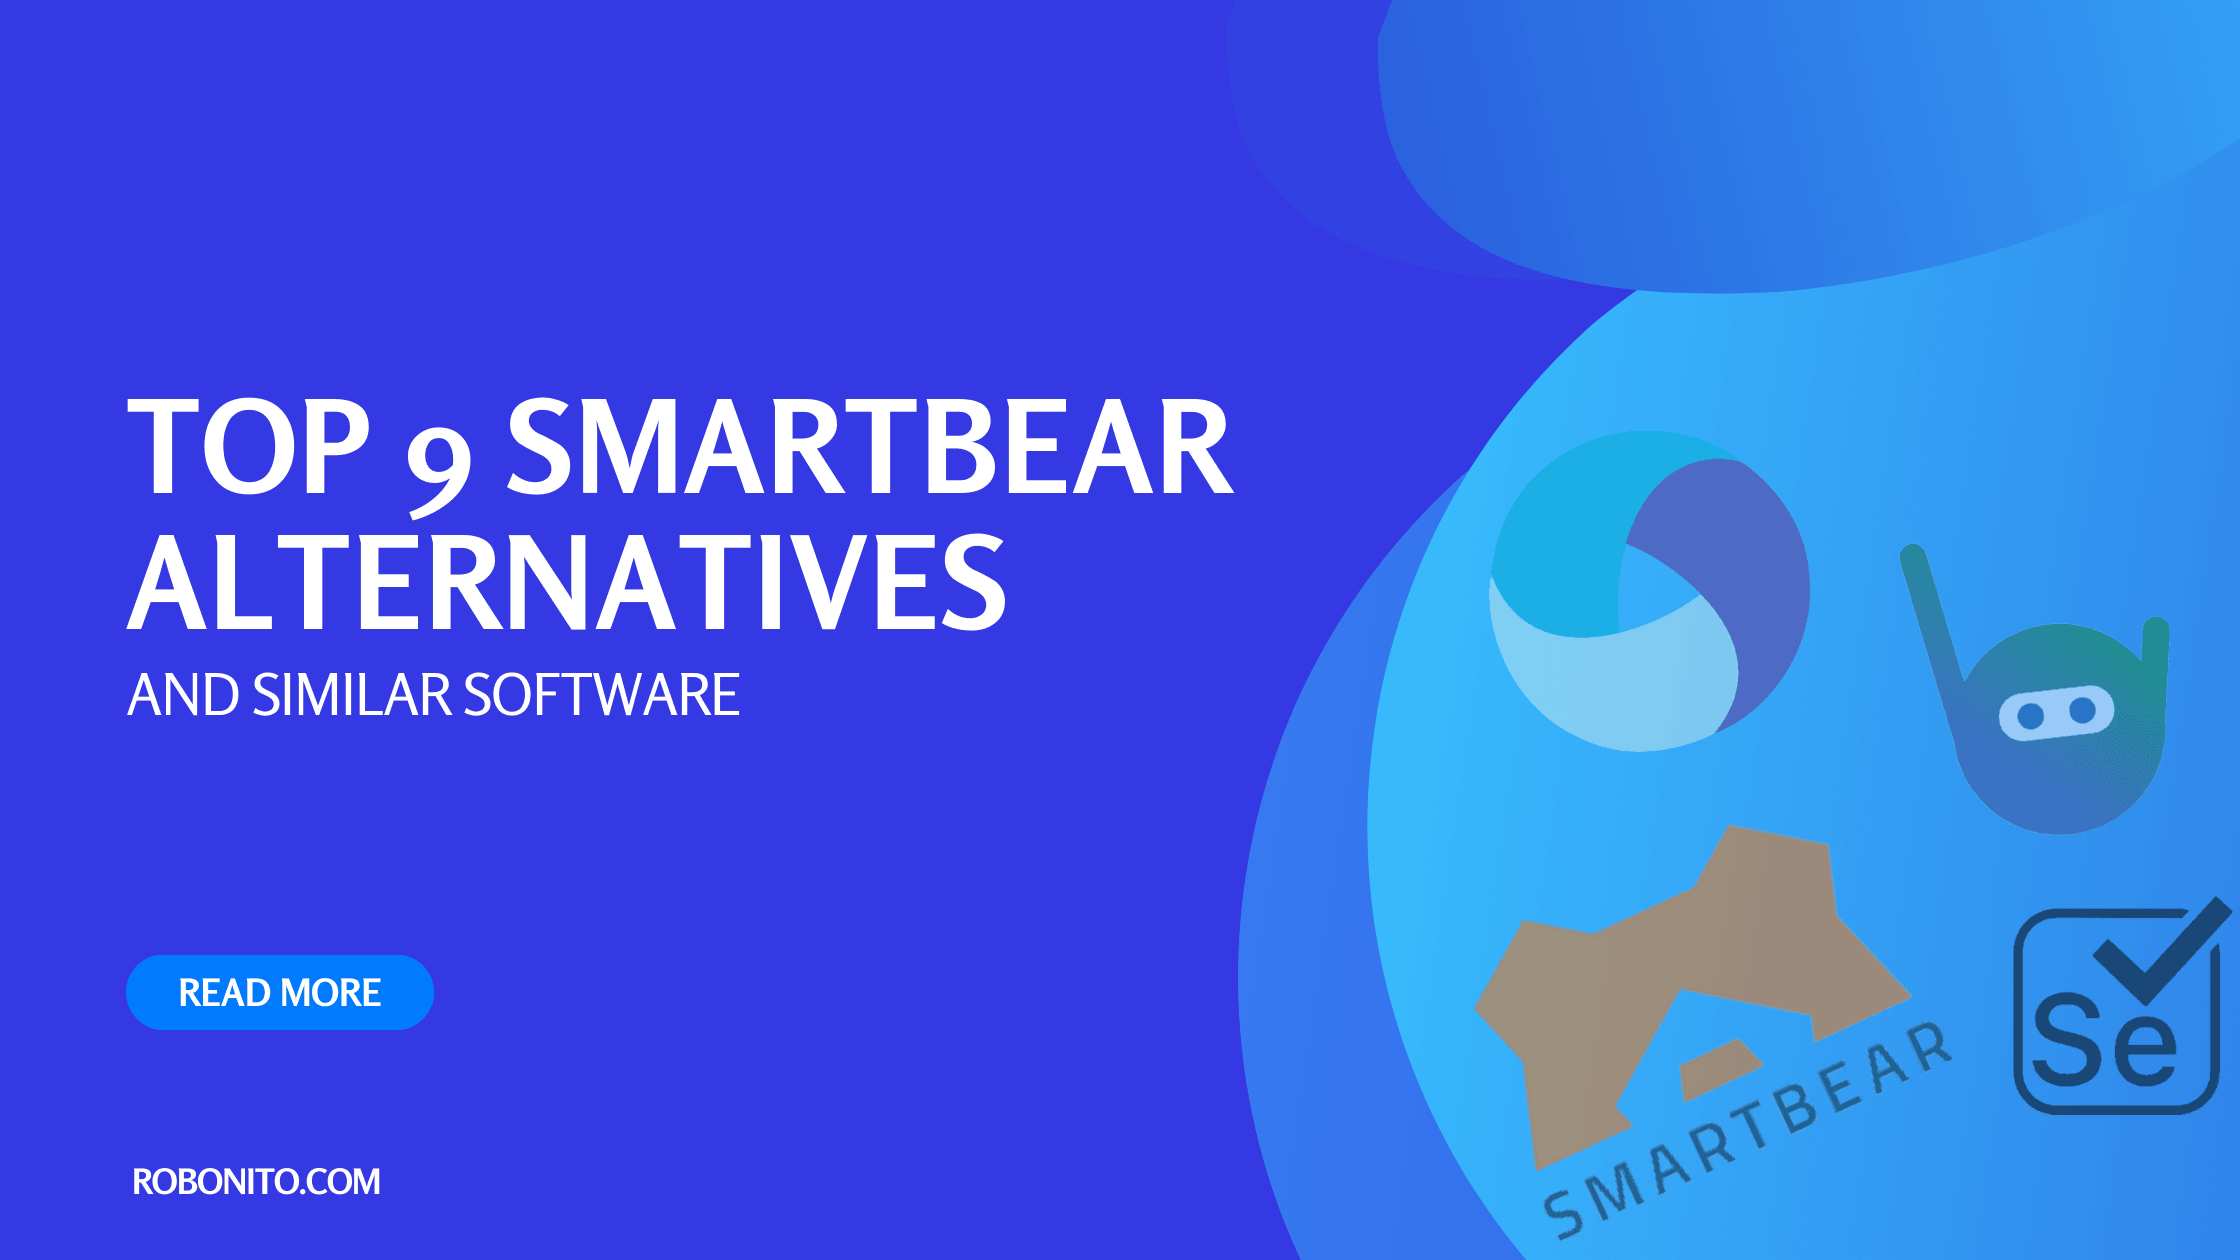 Top 9 Smartbear Alternatives